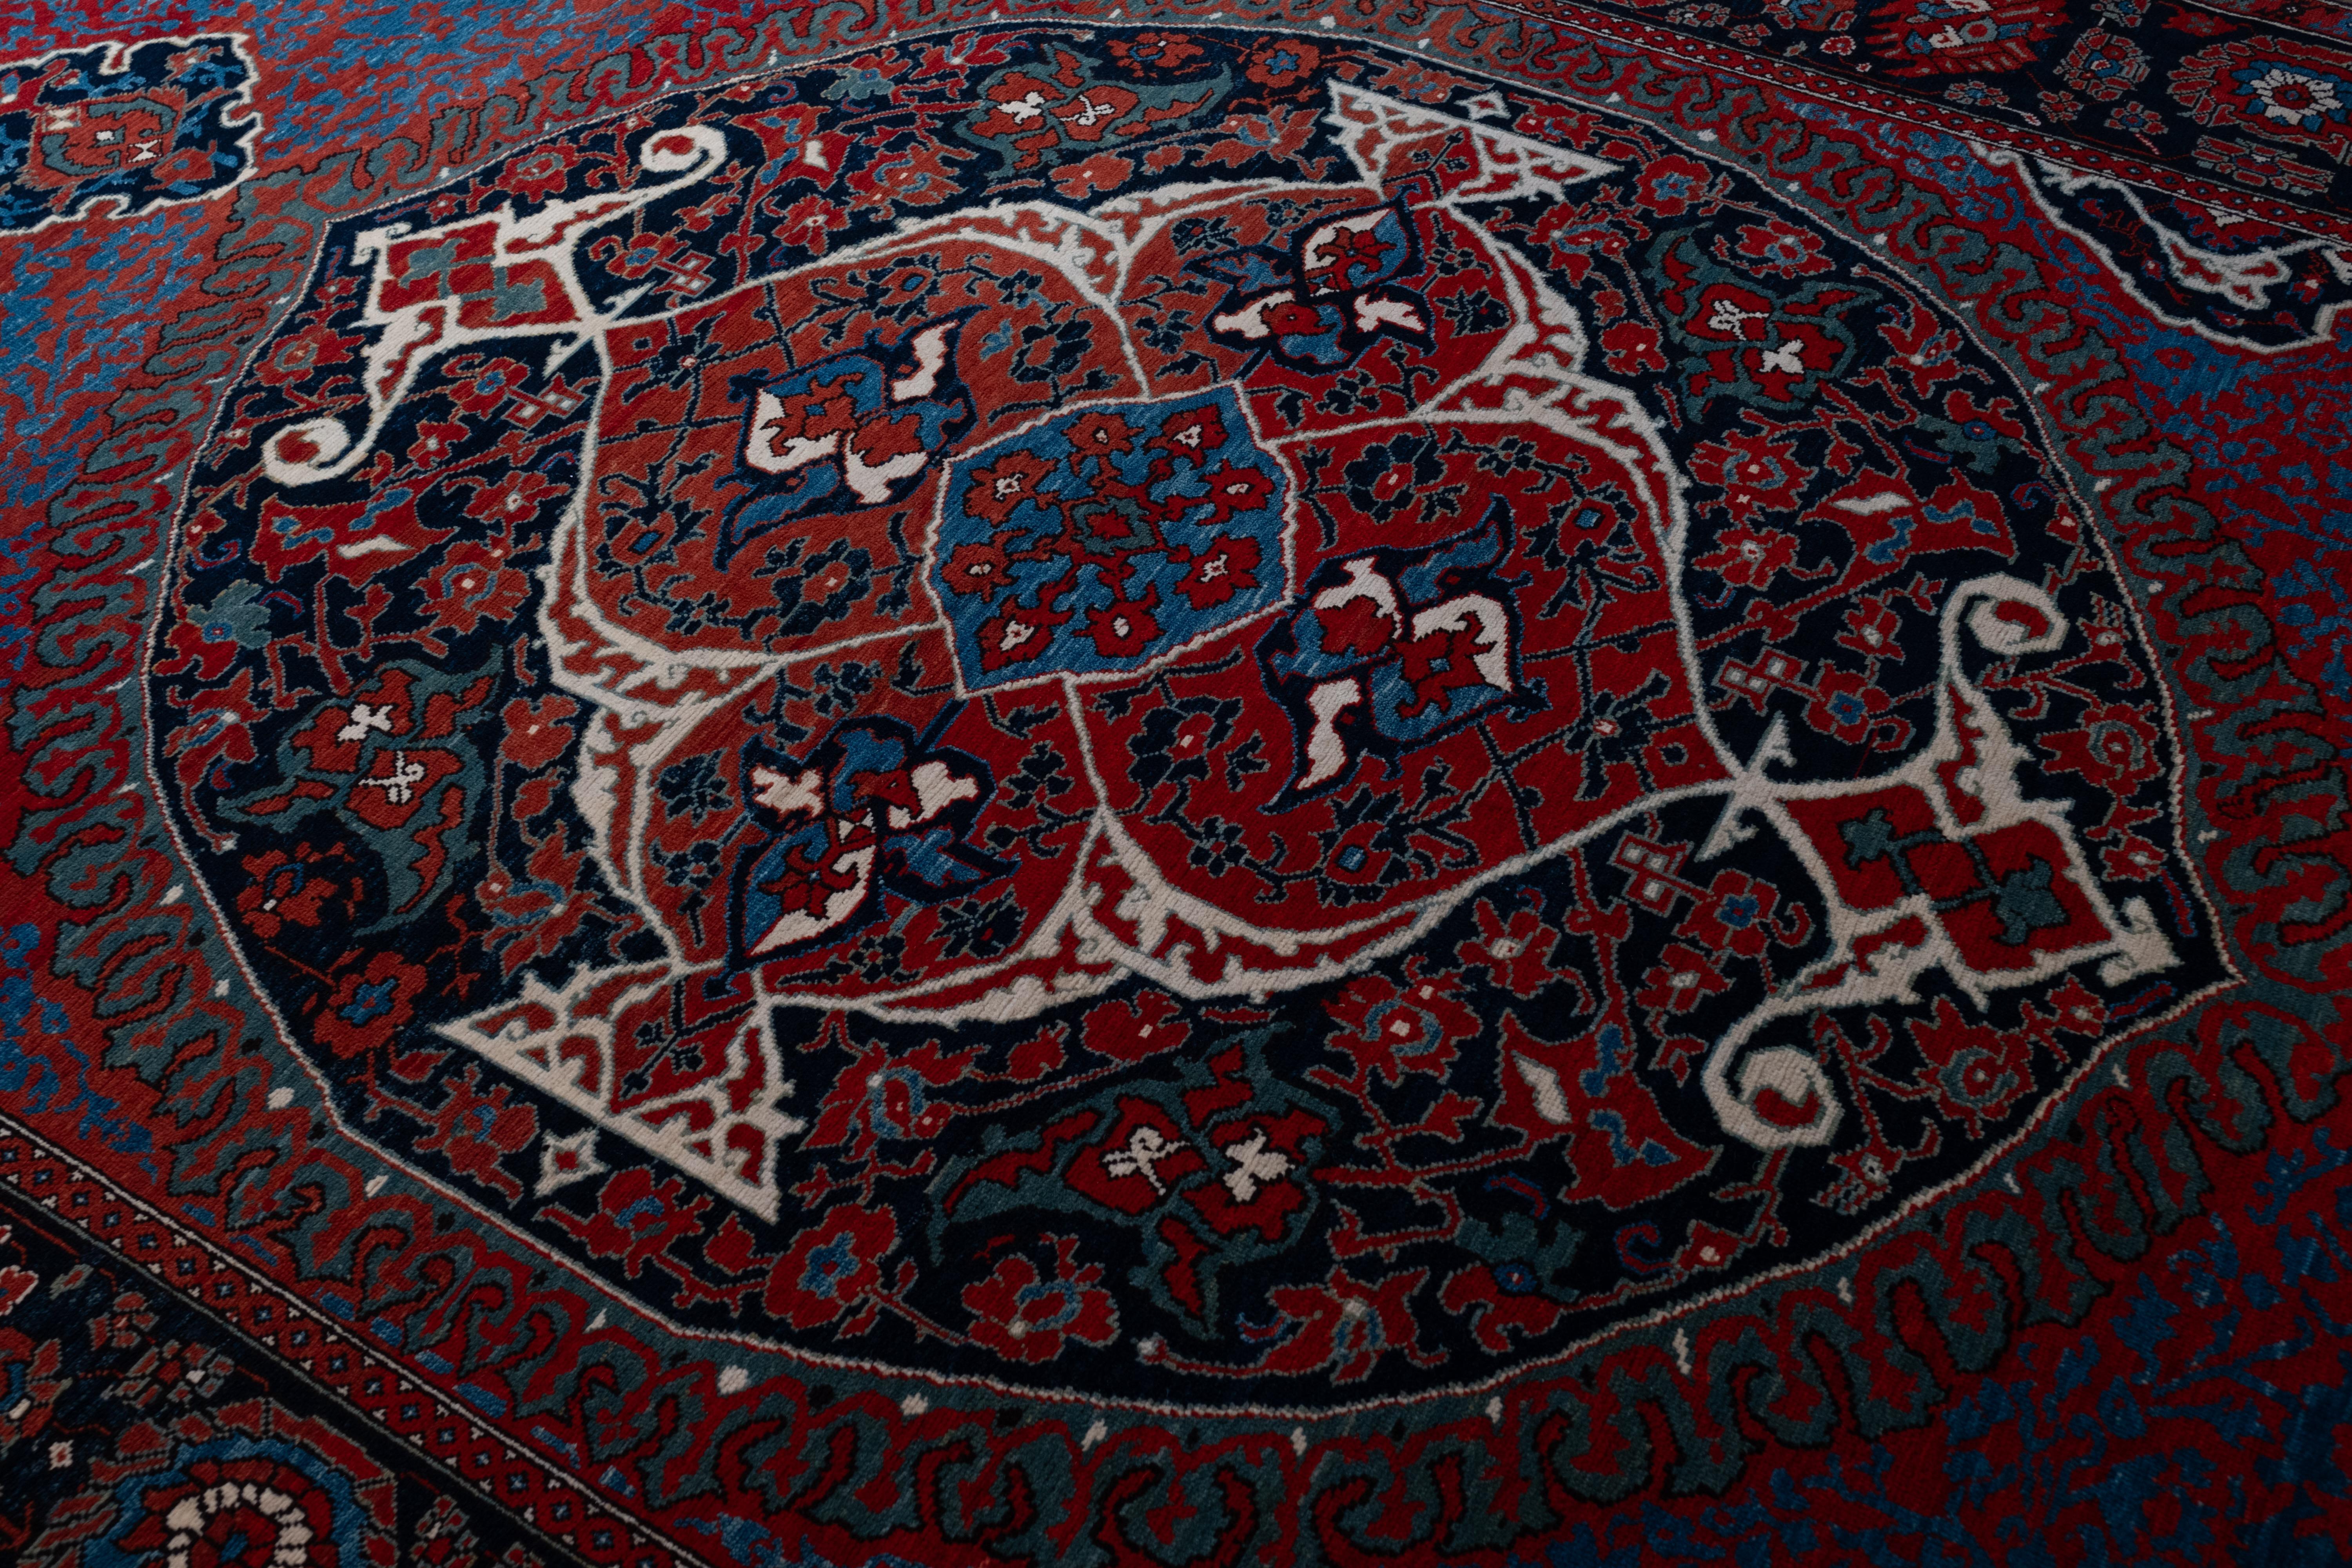 Turkish Ararat Rugs Medallion Ushak Carpet Museum Piece 17th C. Revival Rug Natural Dyed For Sale